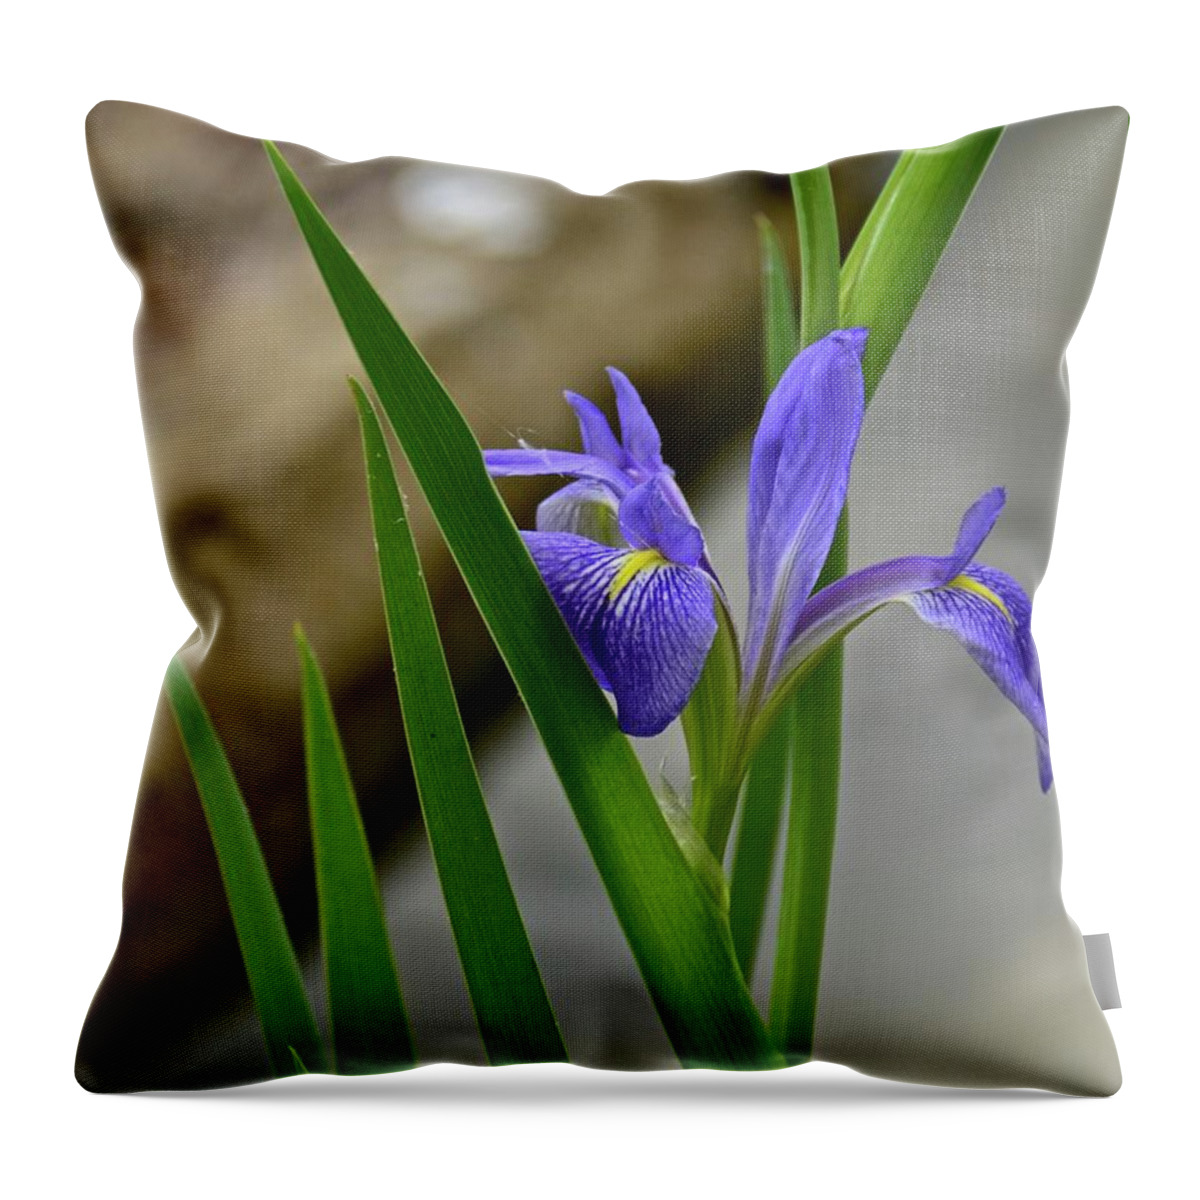 Flower Throw Pillow featuring the photograph Iris #1 by Carol Bradley